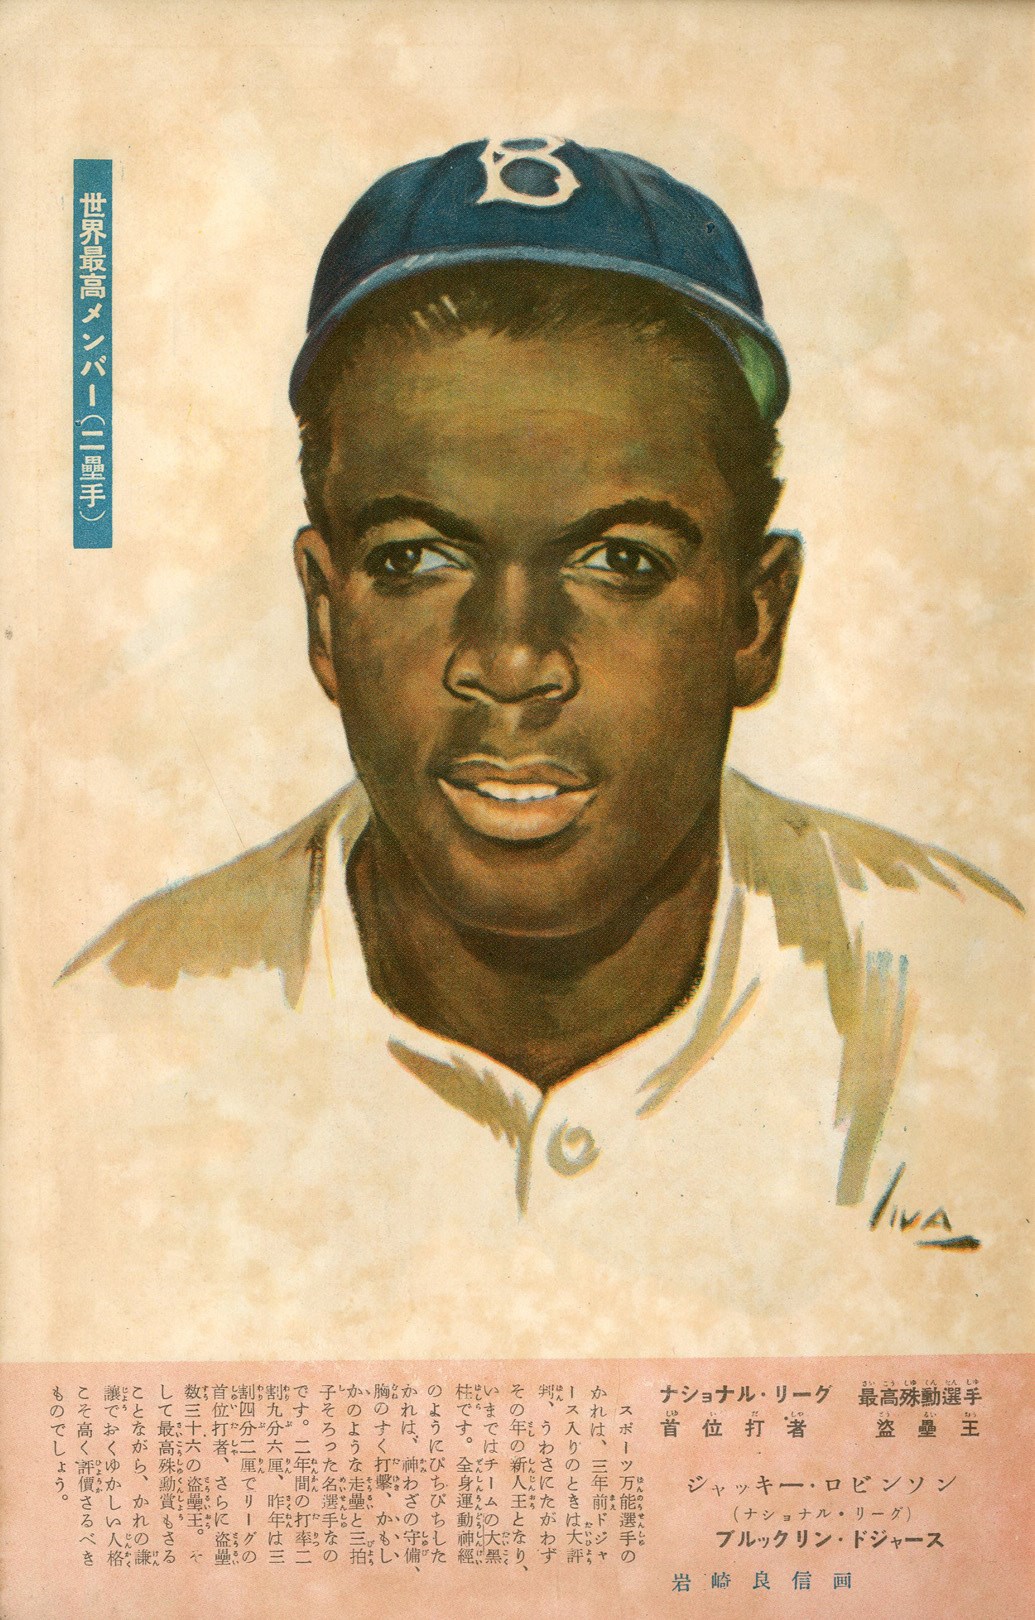 Negro League, Latin, Japanese & International Base - 1950 Japanese Baseball Yearbook w/Incredible Color Portraits